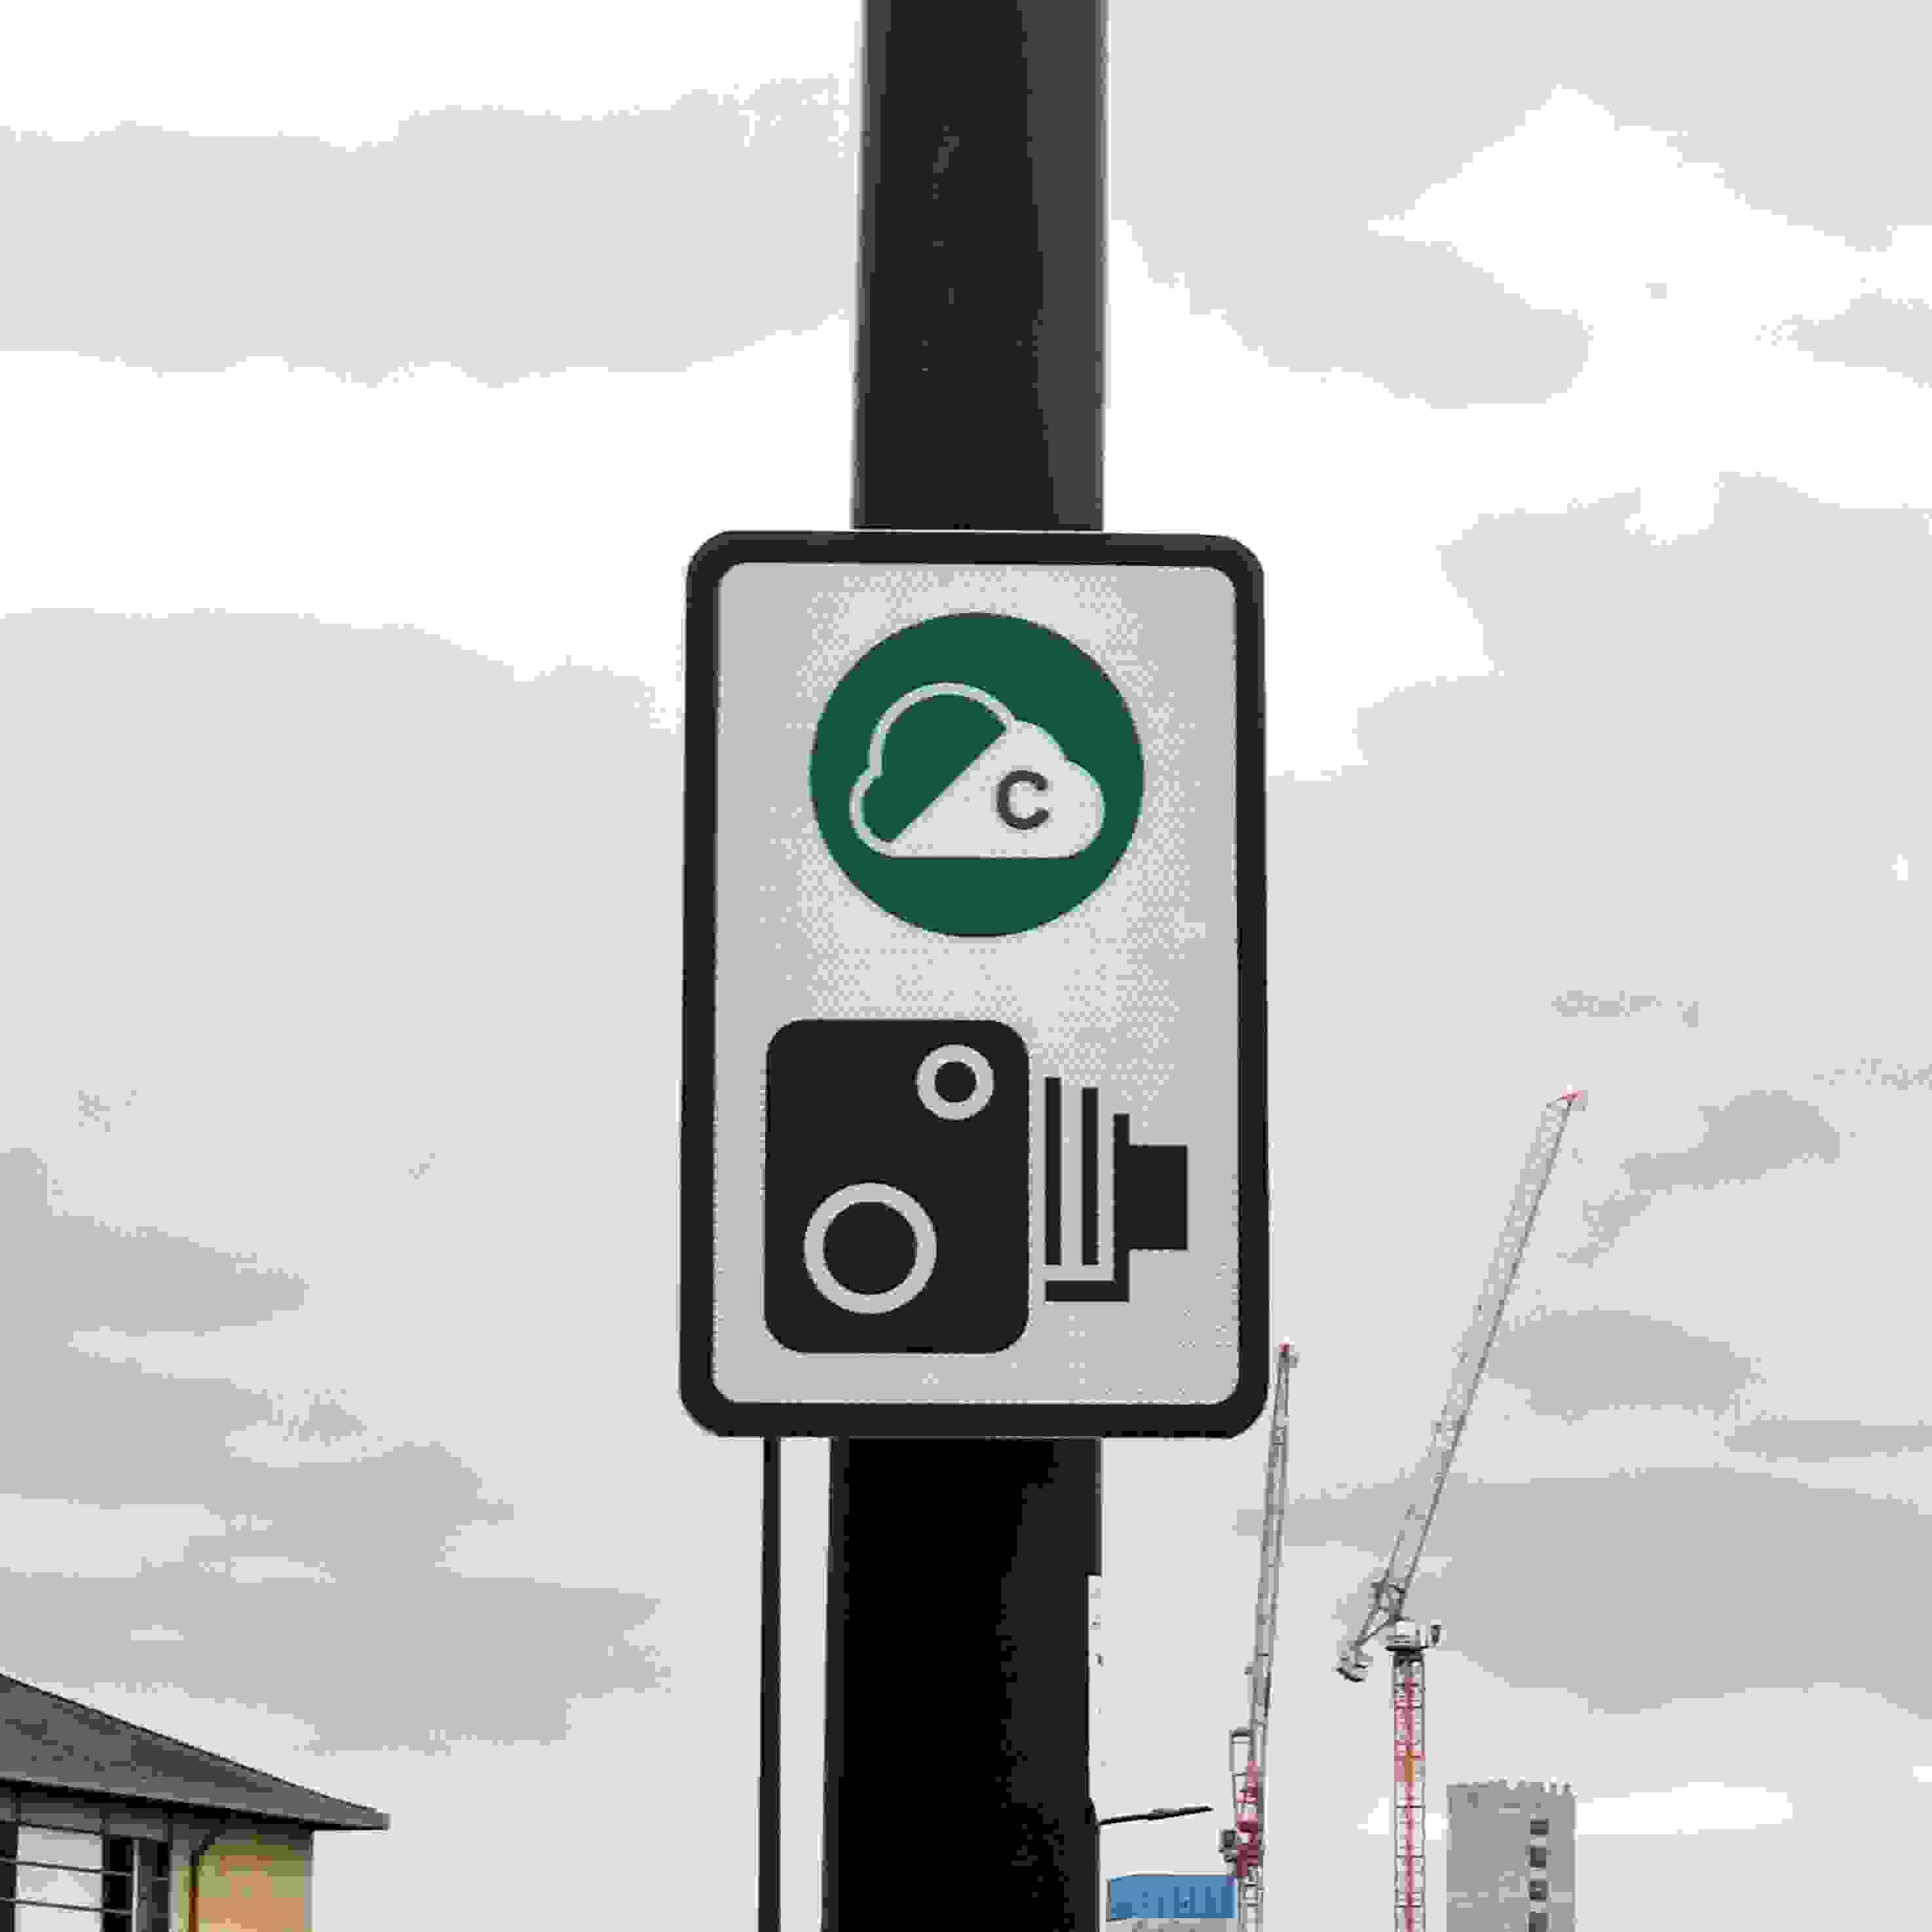 Clean Air Zone camera road sign